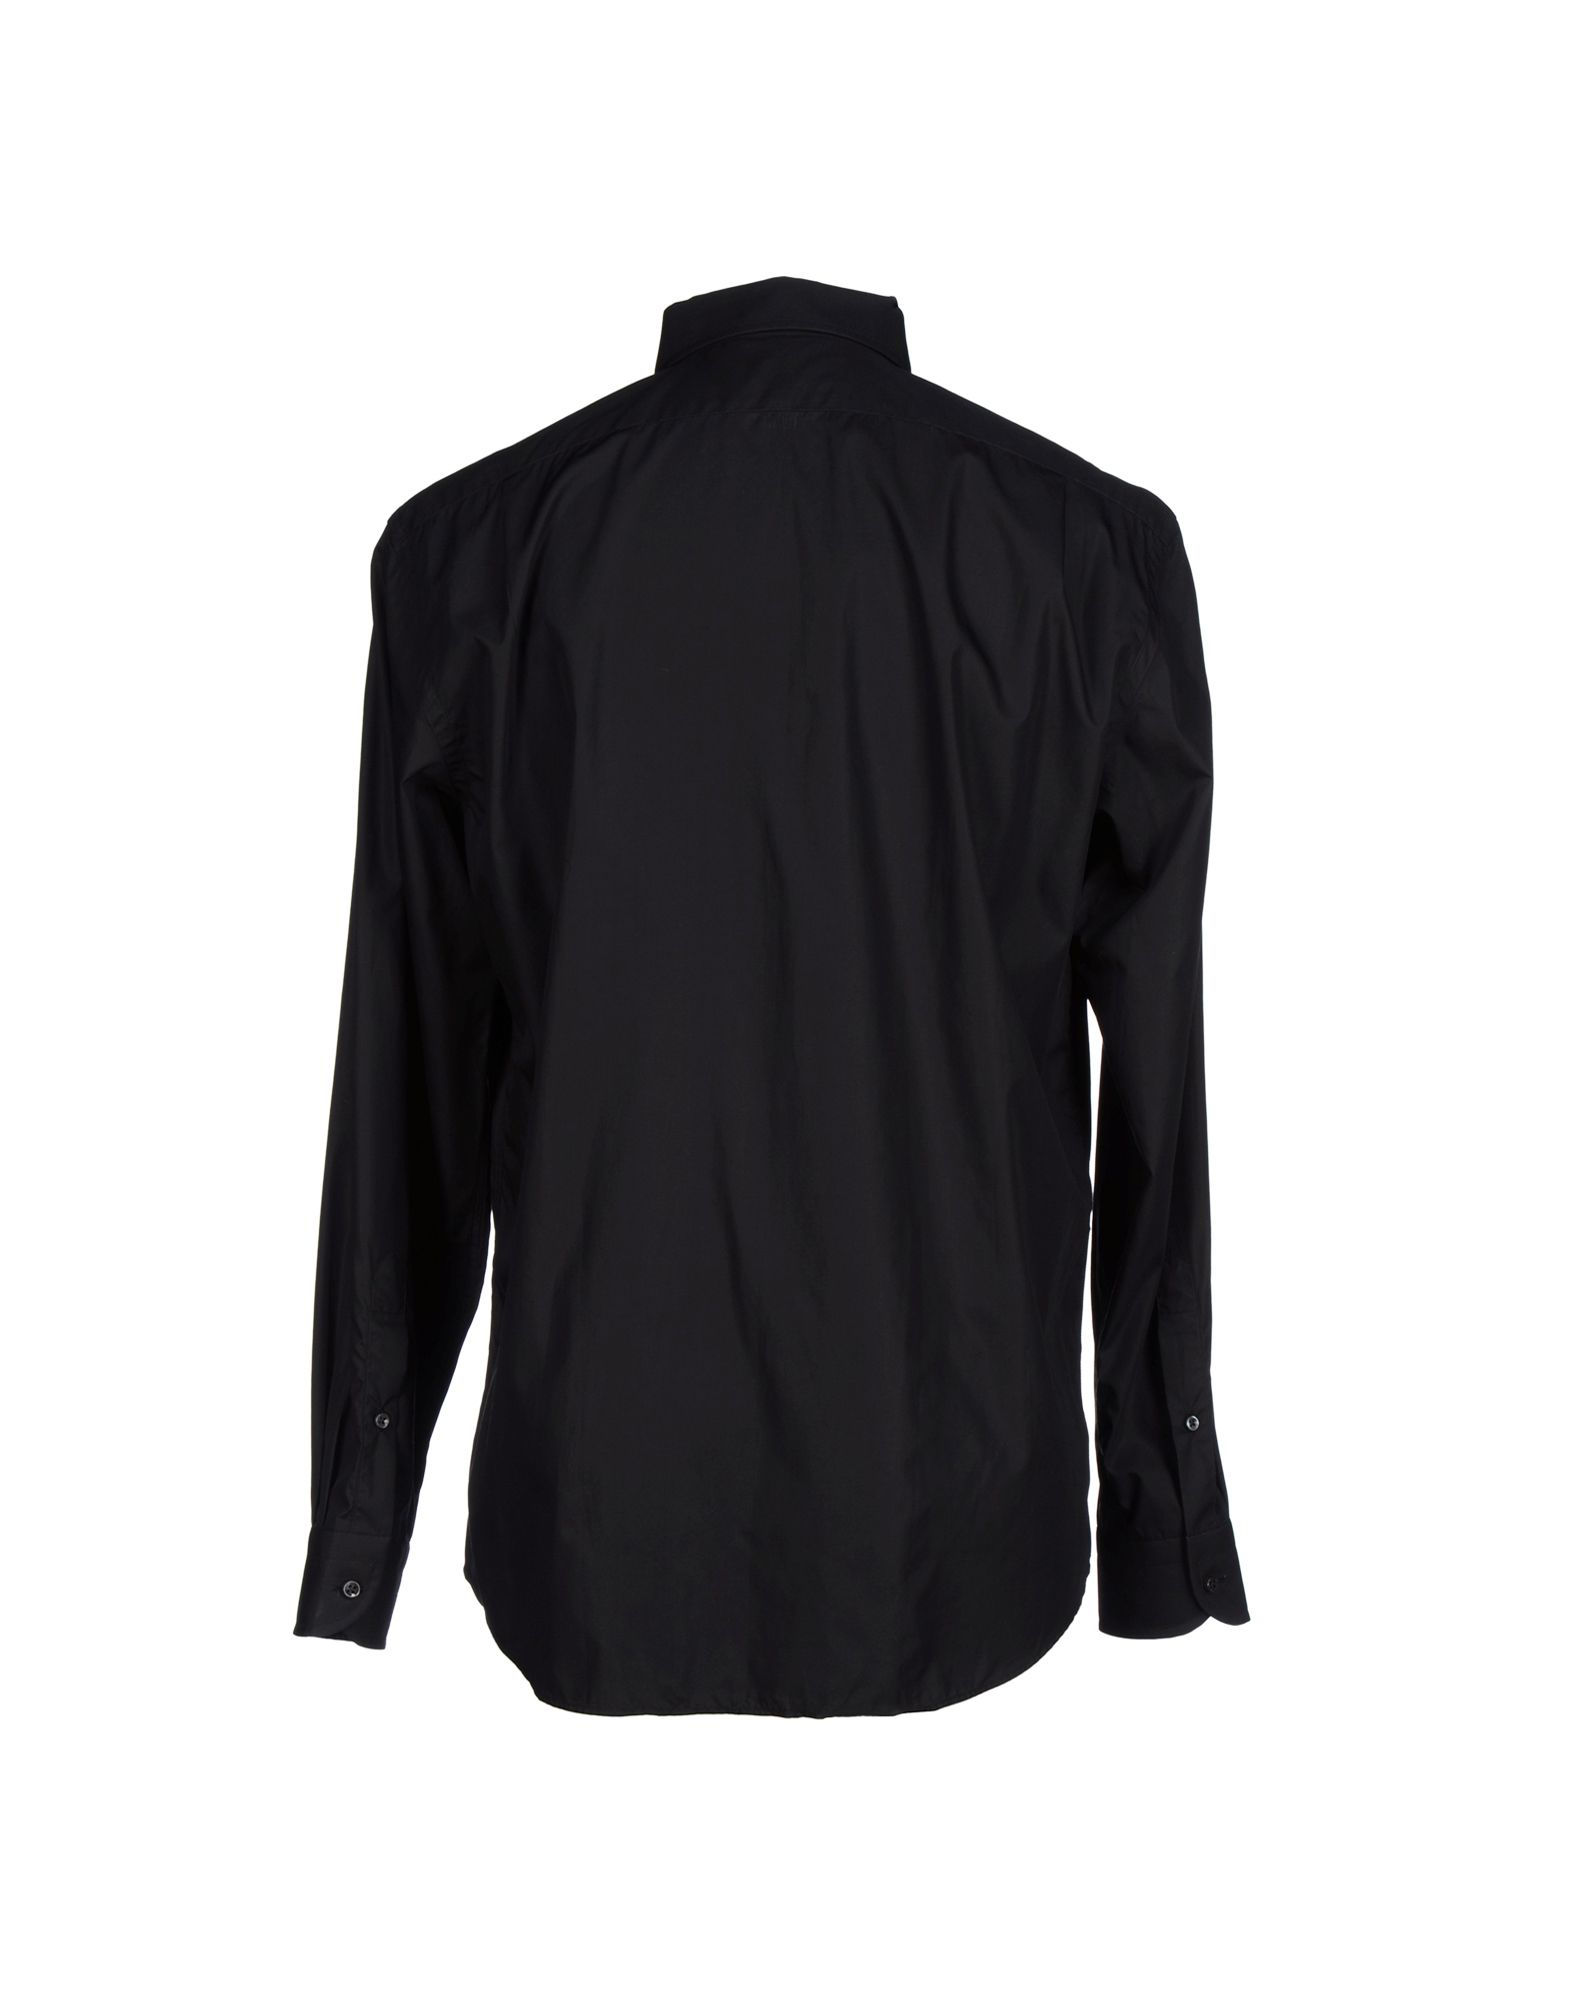 Lyst - Ralph Lauren Black Label Shirt in Black for Men